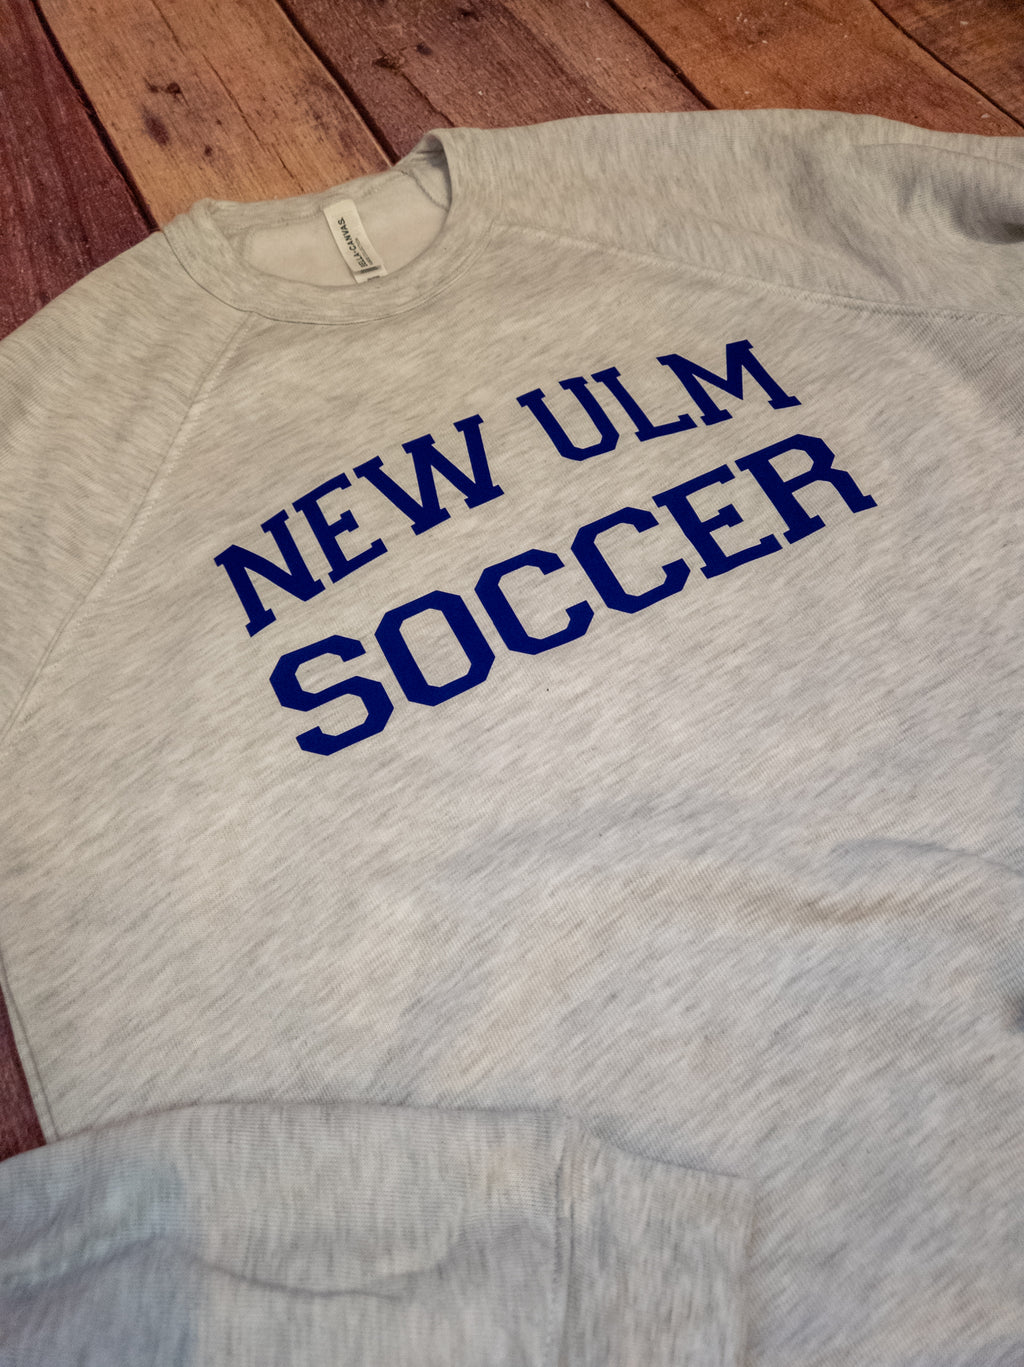 New Ulm Soccer Crewneck Sweatshirt